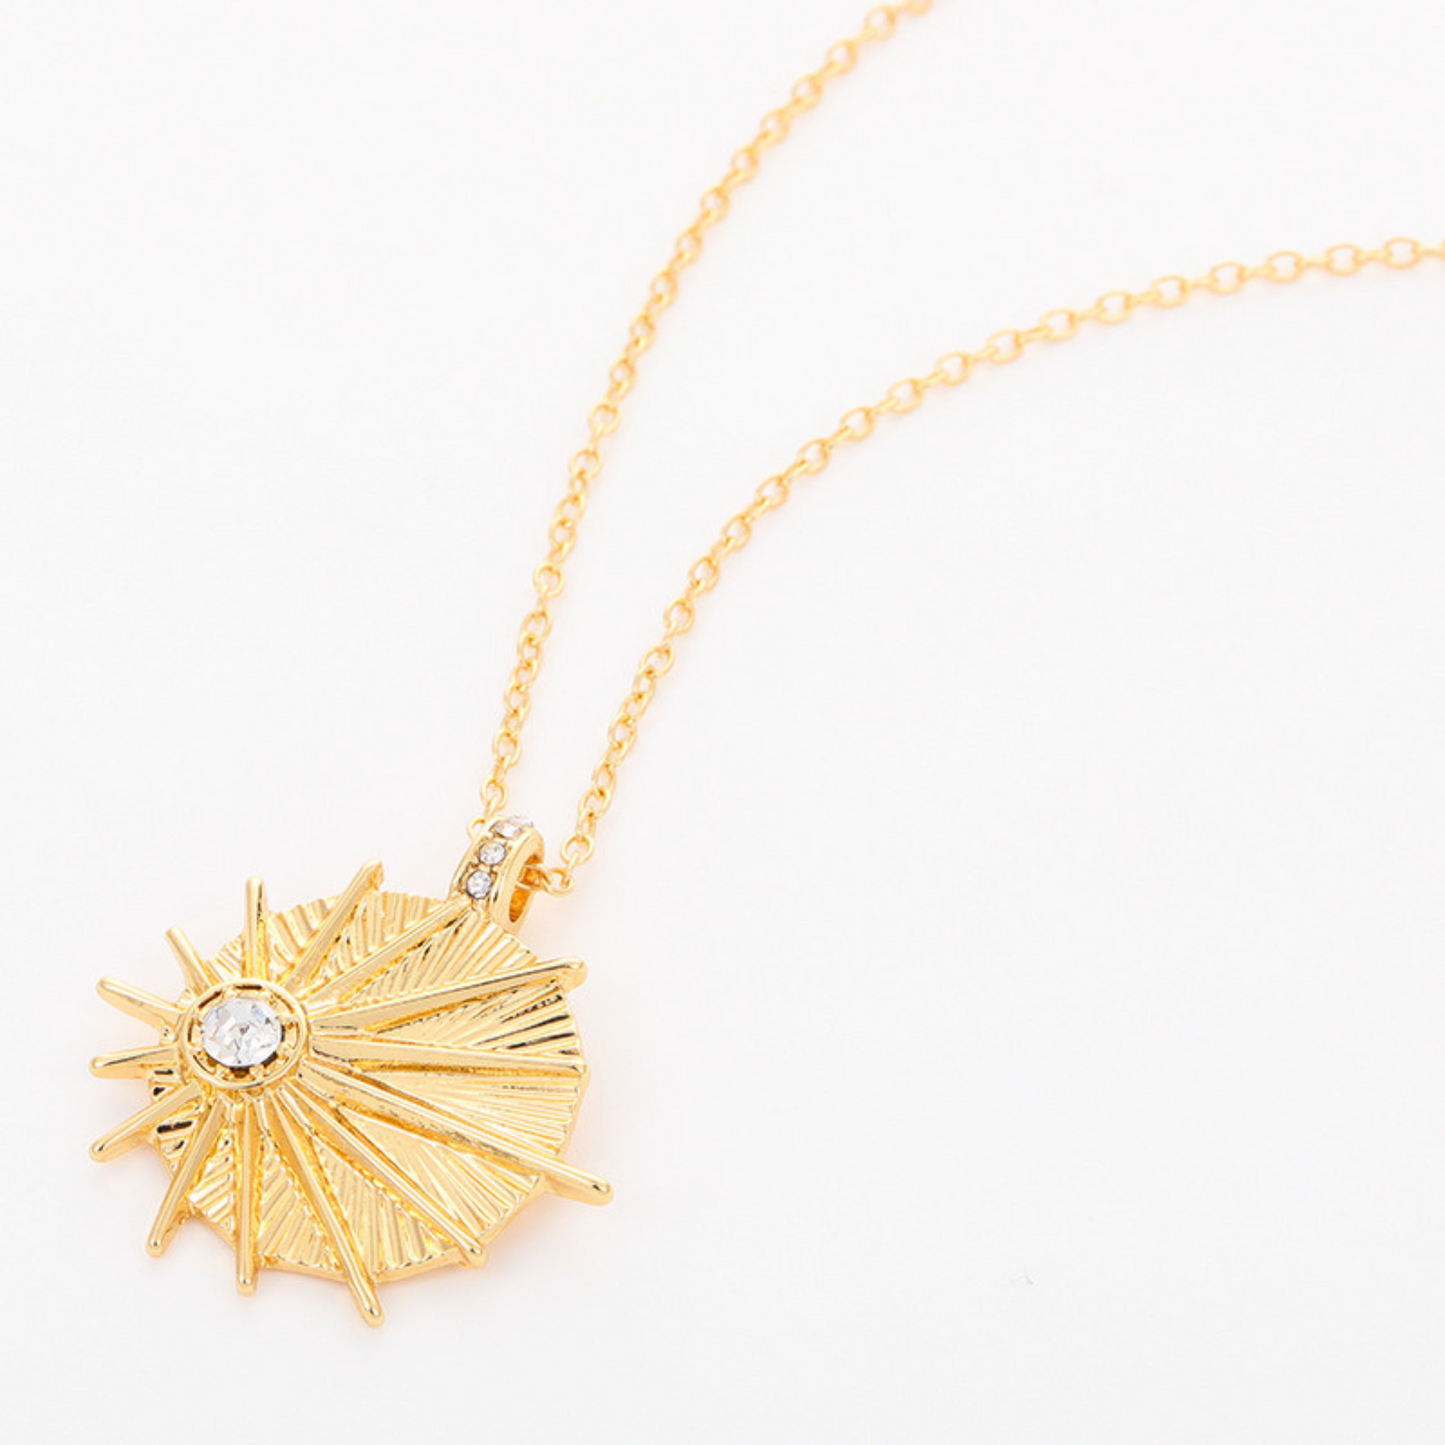 Minimalist Celestial Dainty Necklace for Women